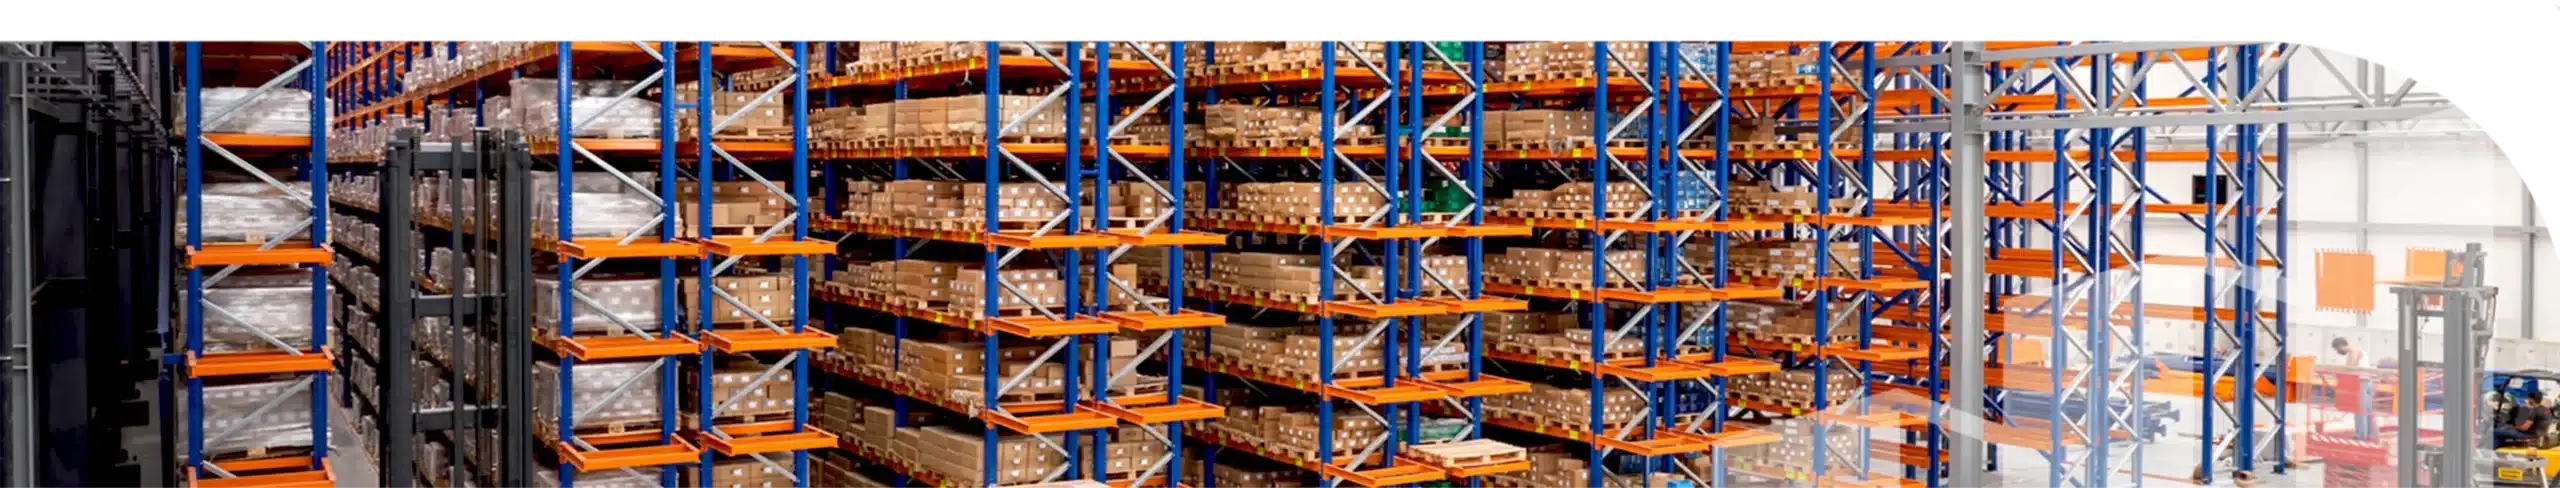 An image of warehouse shelves